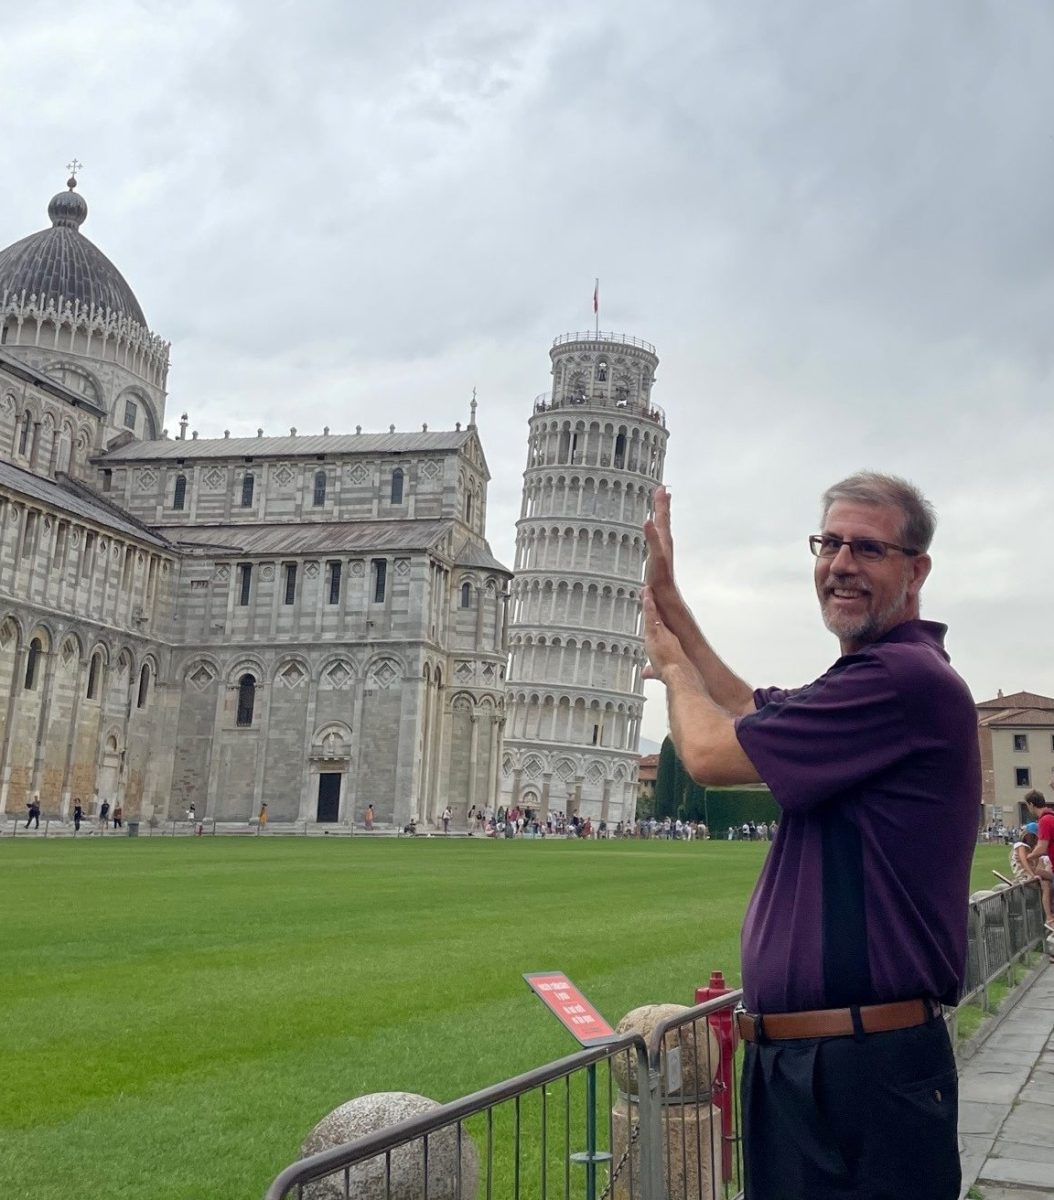 Joel Hauff - UV Staff Member "Holding Up" the Leaning Tower of Pisa